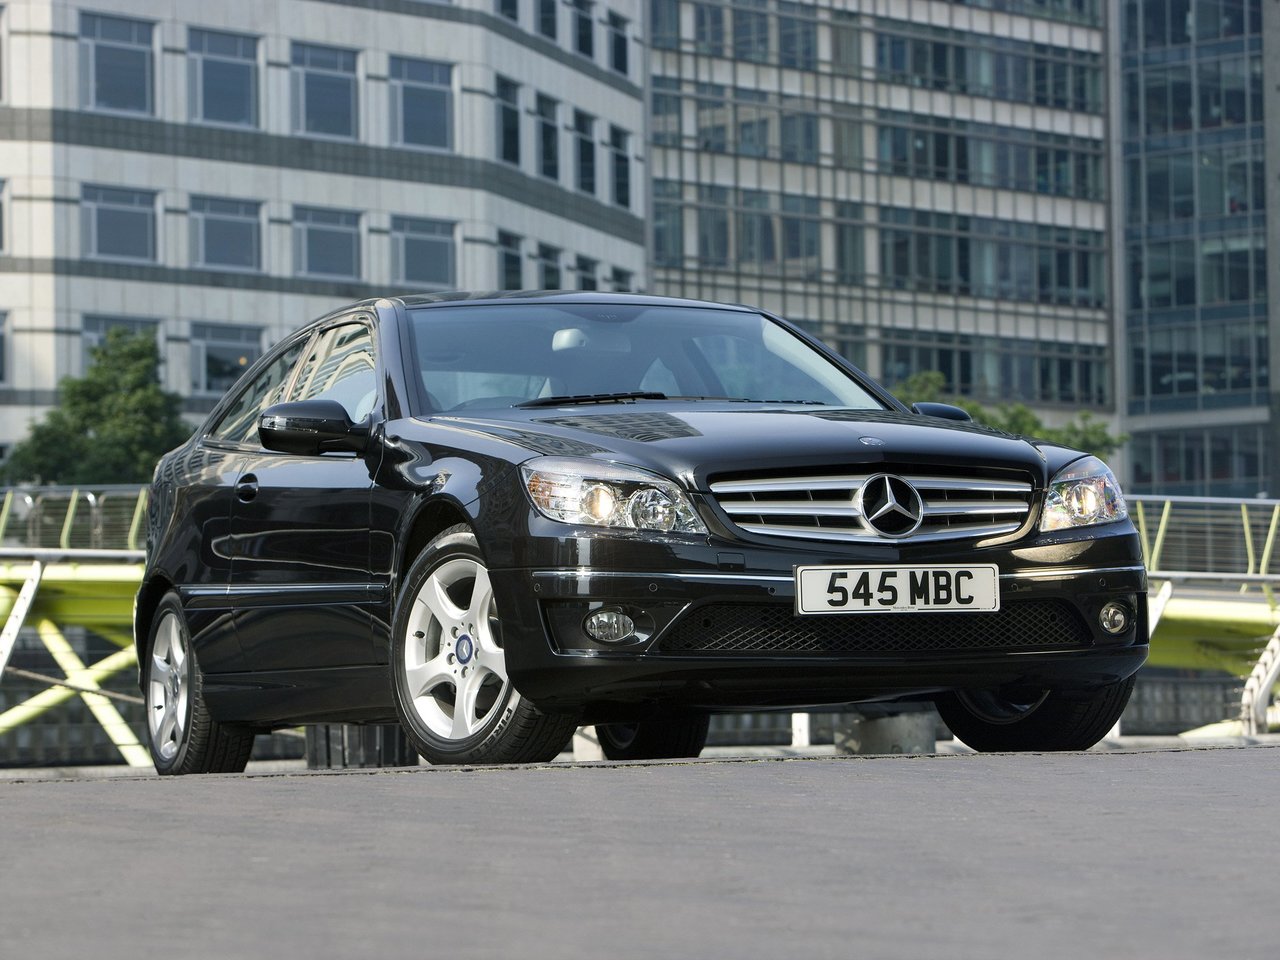 All photos, interior and exterior Mercedes-Benz CLC-klasse CL203 Coupe 2008